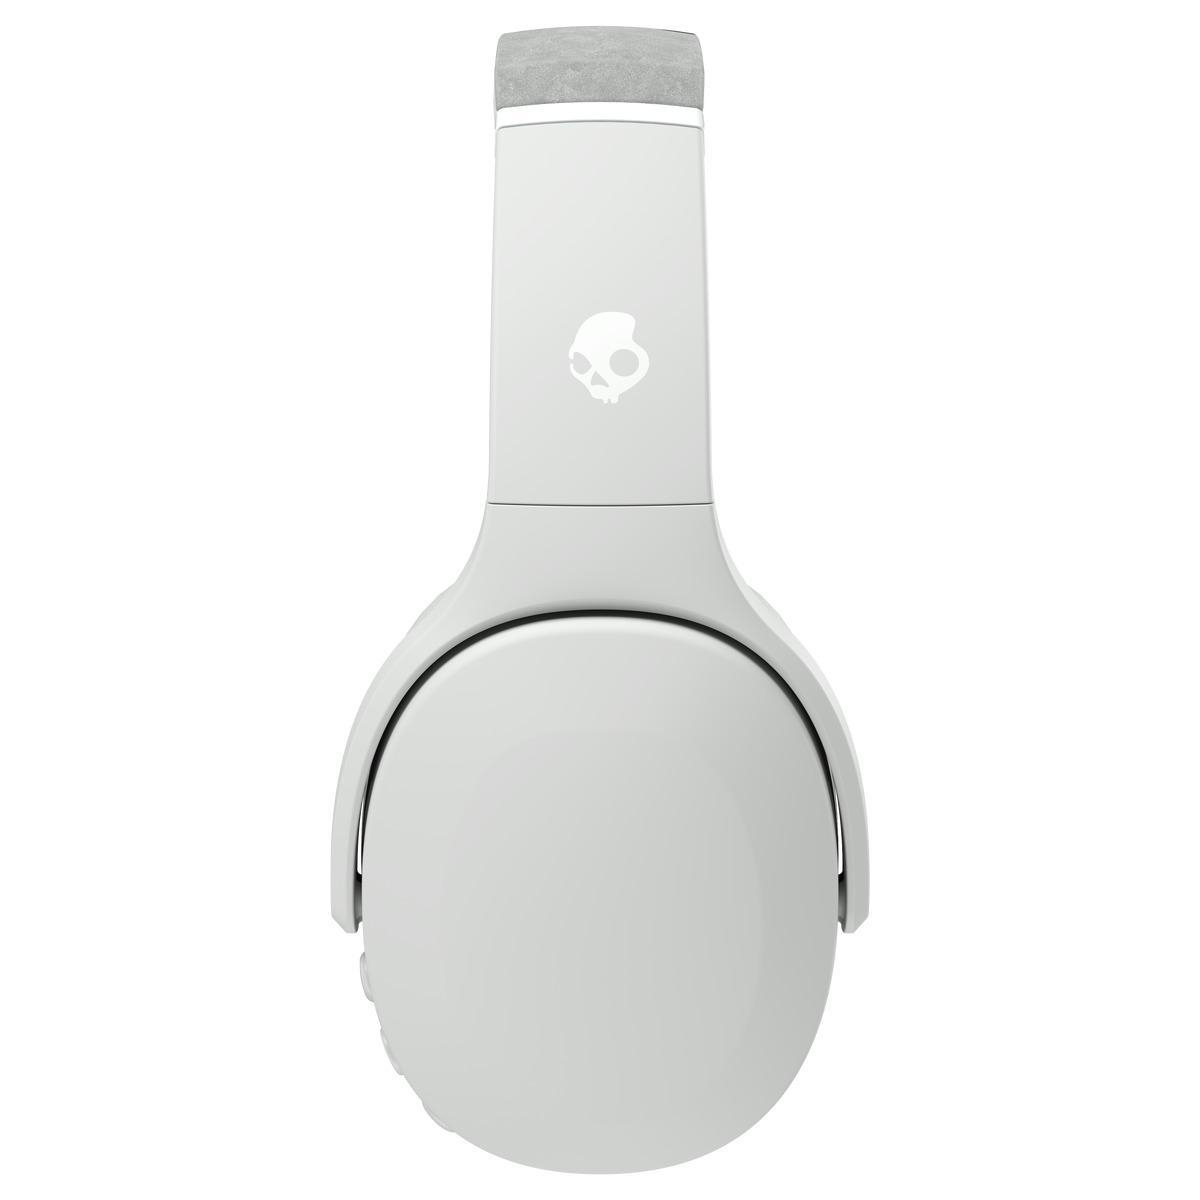 SKULLCANDY CRUSHER EVO, Over-ear Kopfhörer Light Grey/Blue Bluetooth